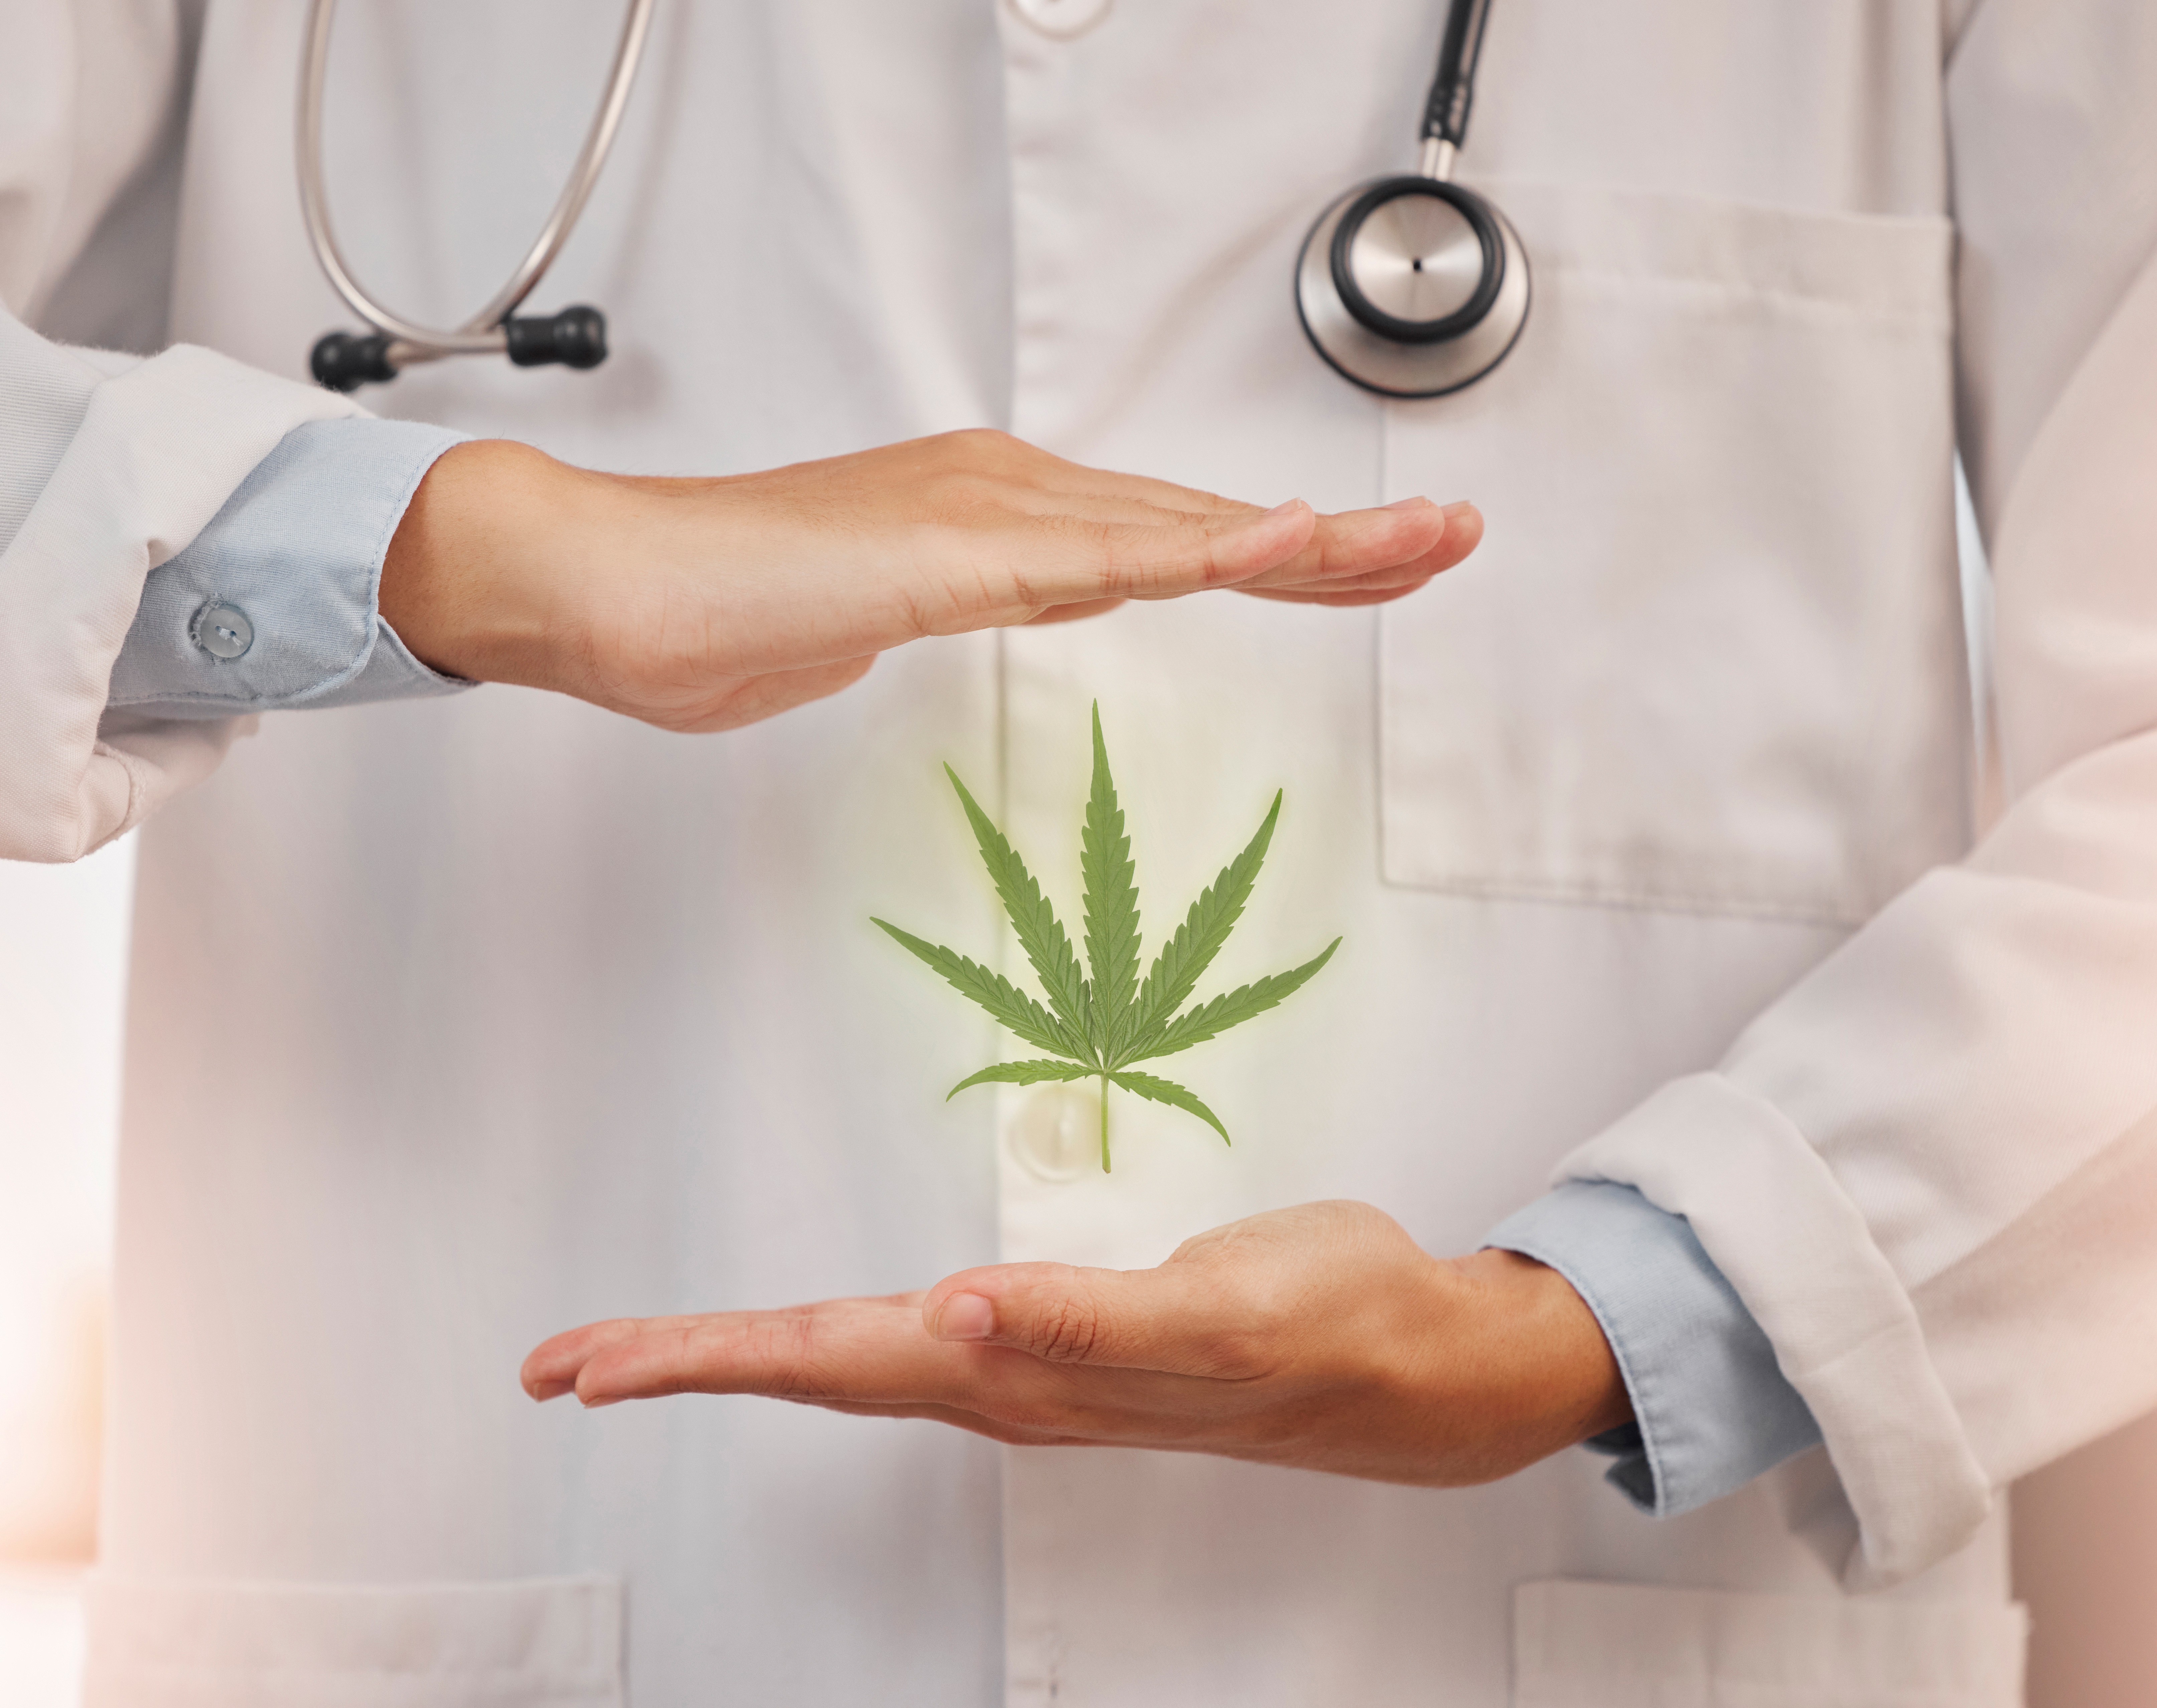 Medical cannabis bill passes Senate, awaits House vote March 30